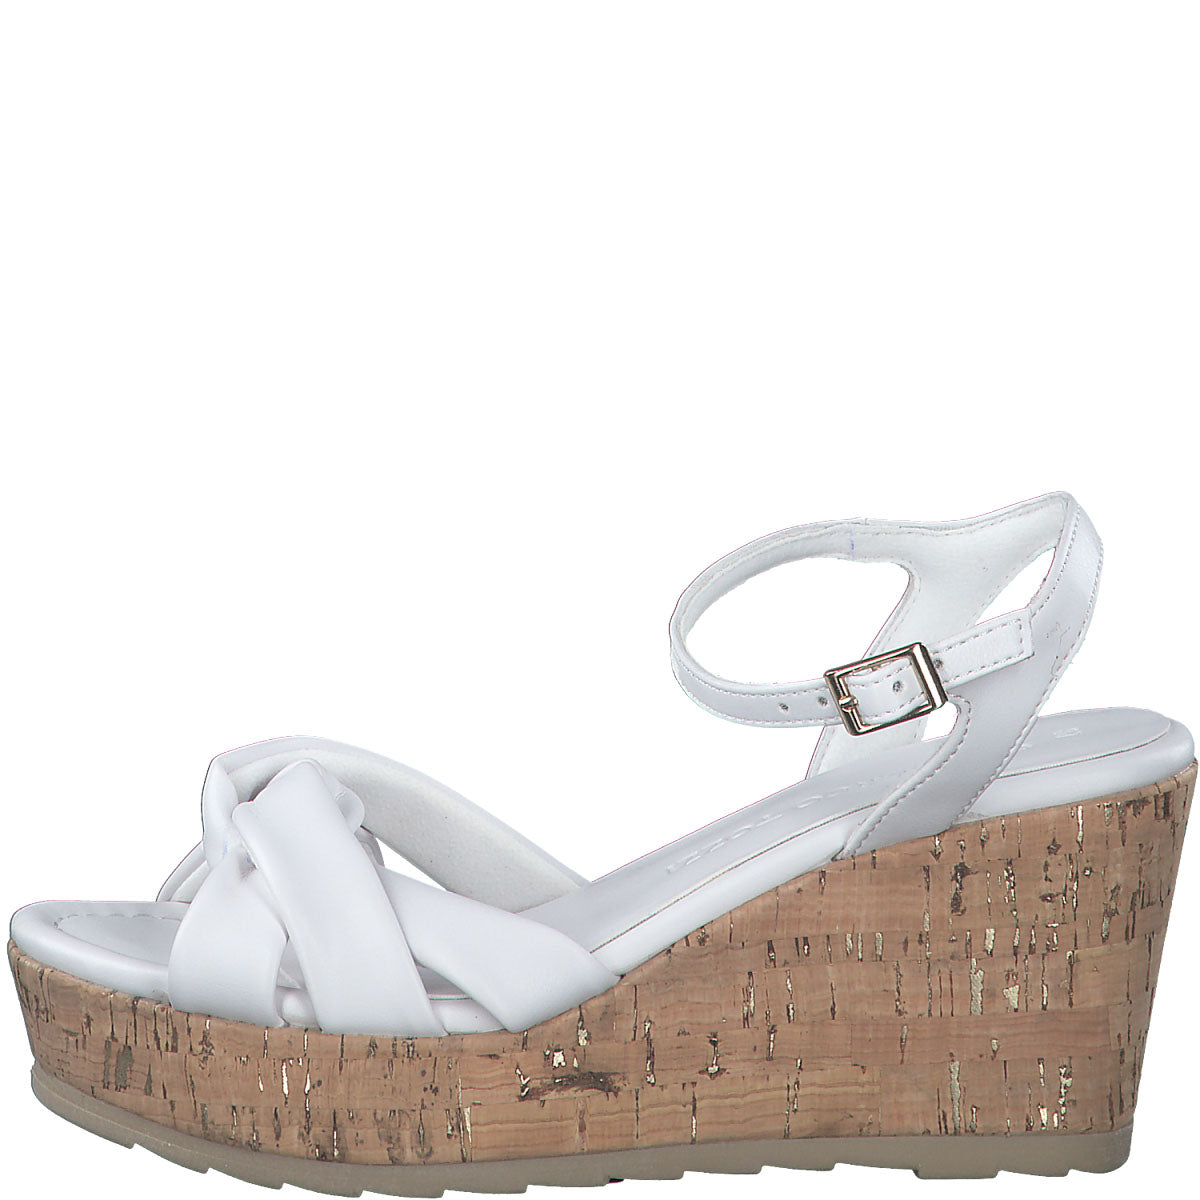 Stylish White Cork Wedge Sandals for Summer